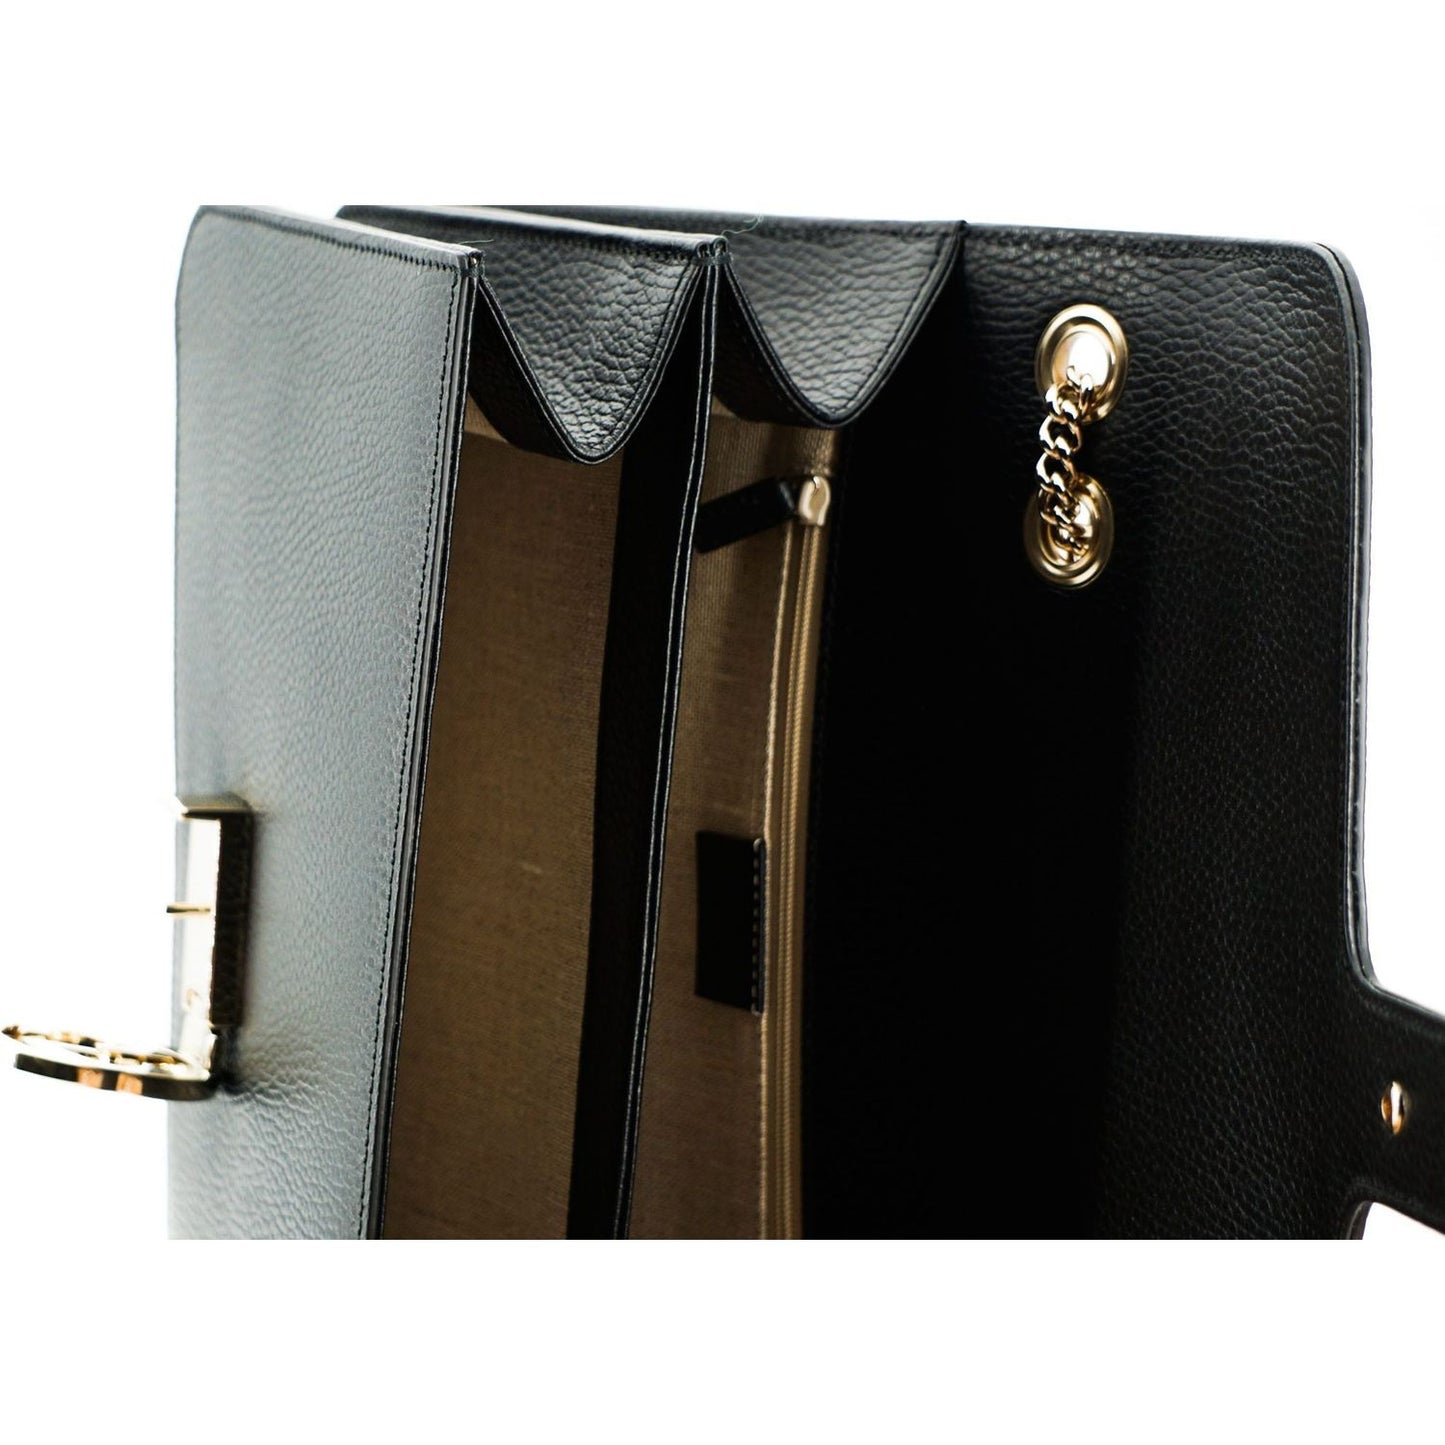 Gucci Elegant Calf Leather Shoulder Bag black-calf-leather-dollar-shoulder-bag-2 D50040-4-1-scaled-e8aa8e5e-b1a.jpg